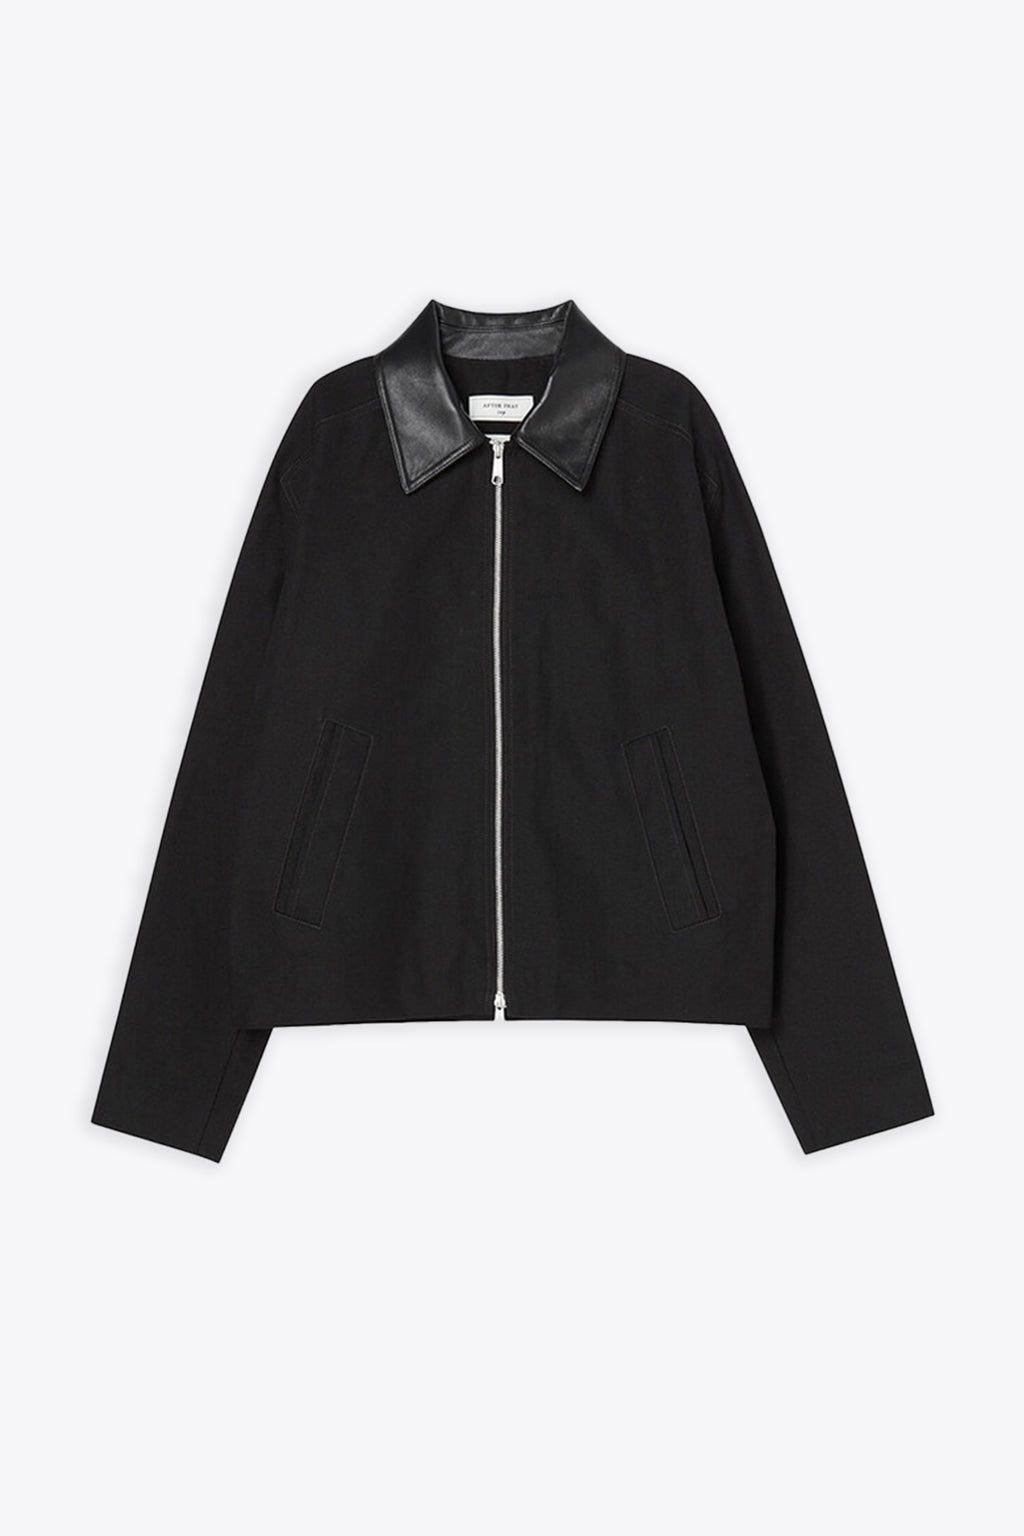 alt-image__Black-canvas-jacket-with-leather-collar---Leather-Collar-Cotton-Blouson-